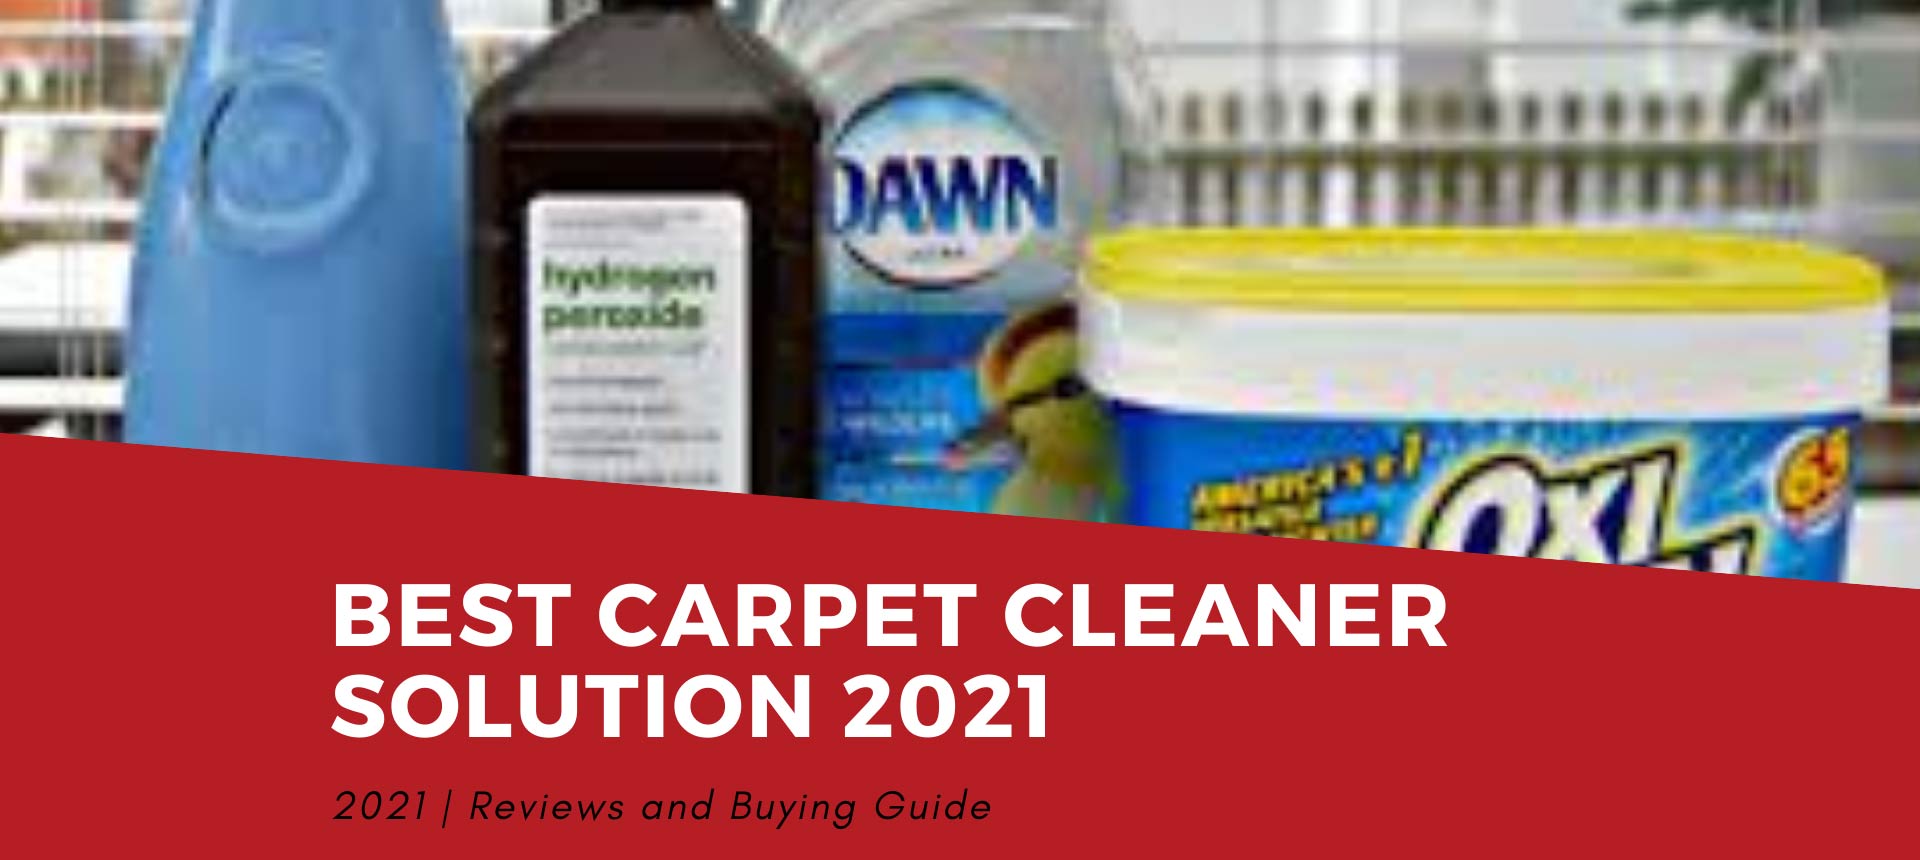 Best Carpet Cleaner Solution 2021 Reviews